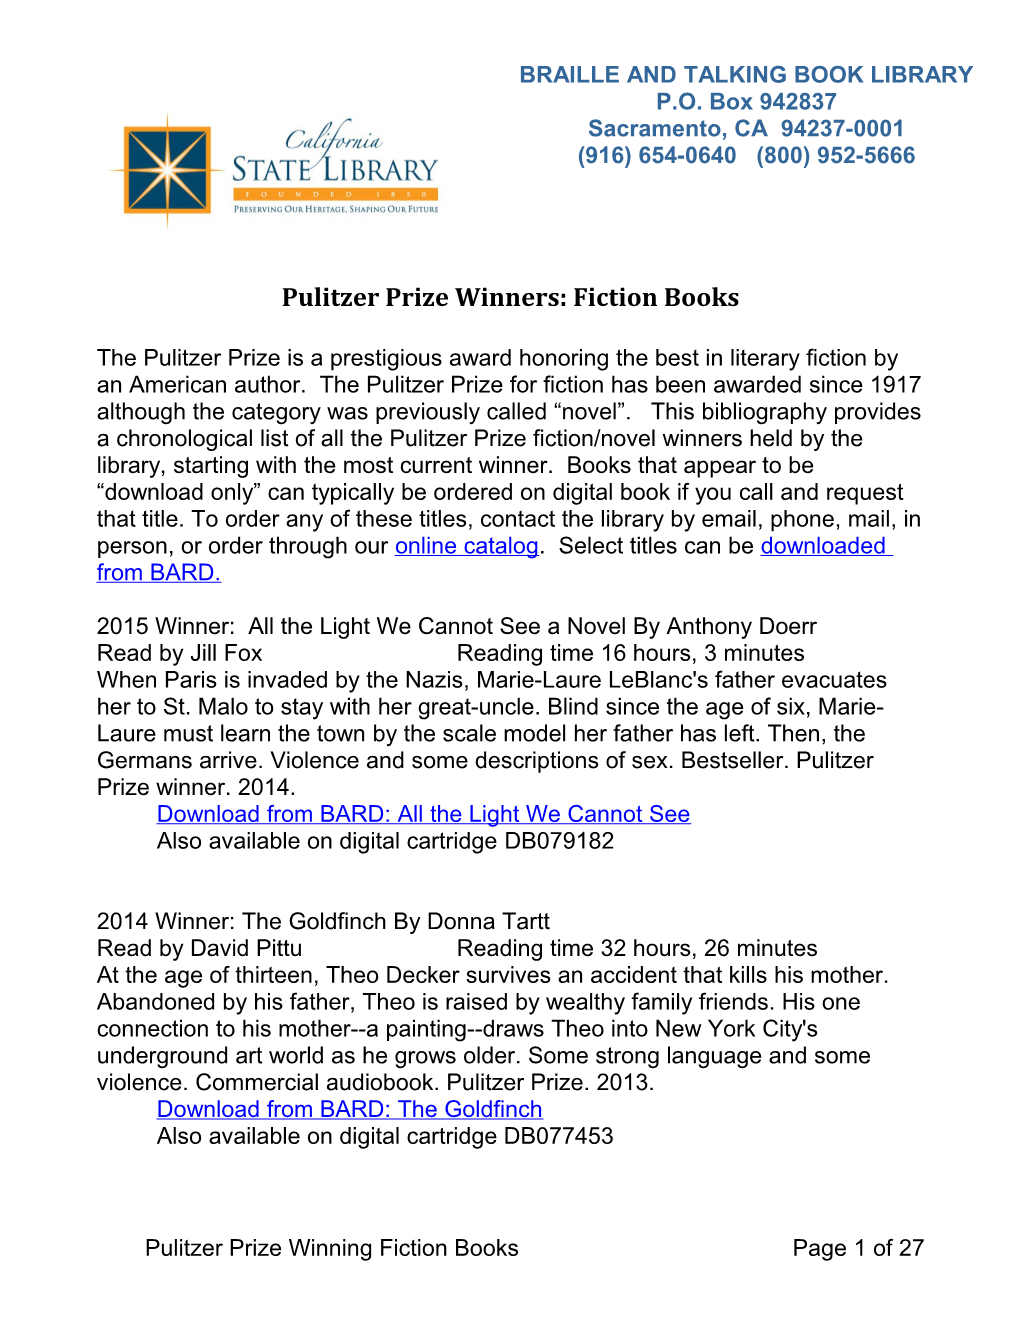 Pulitzer Prize Winners: Fiction Books